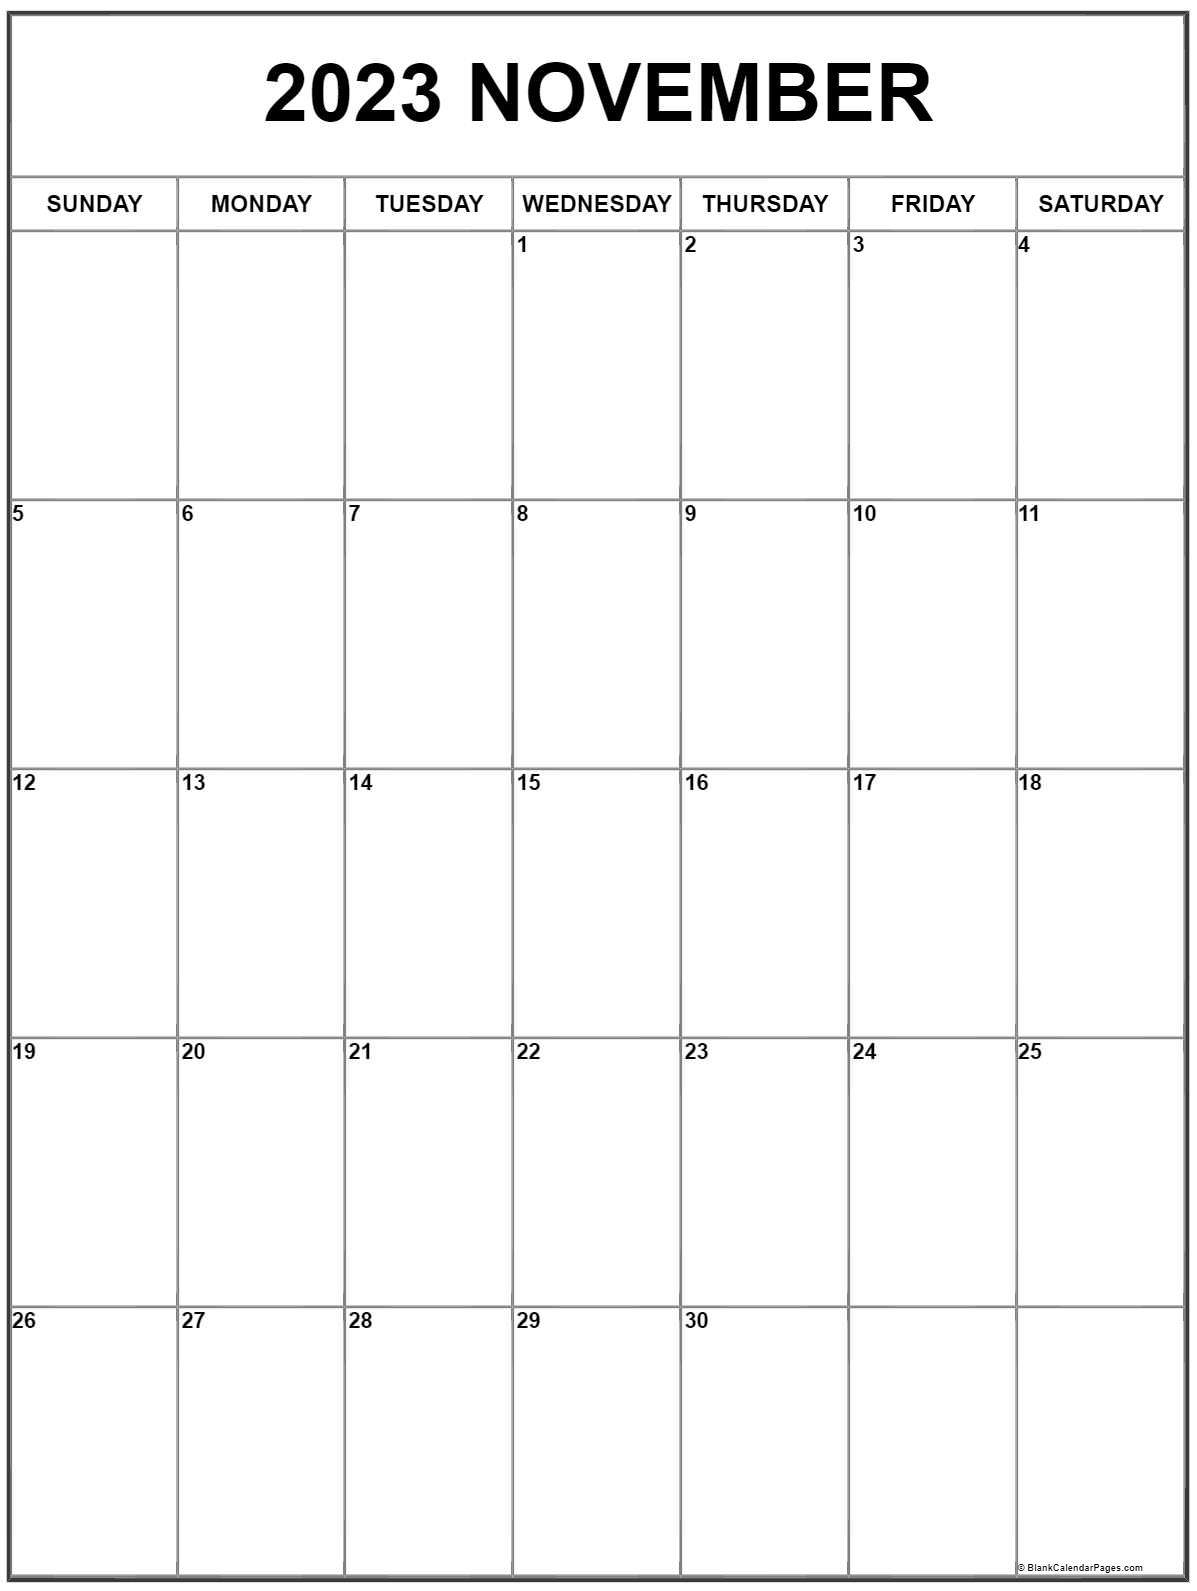 november-2023-calendar-free-blank-printable-with-holidays